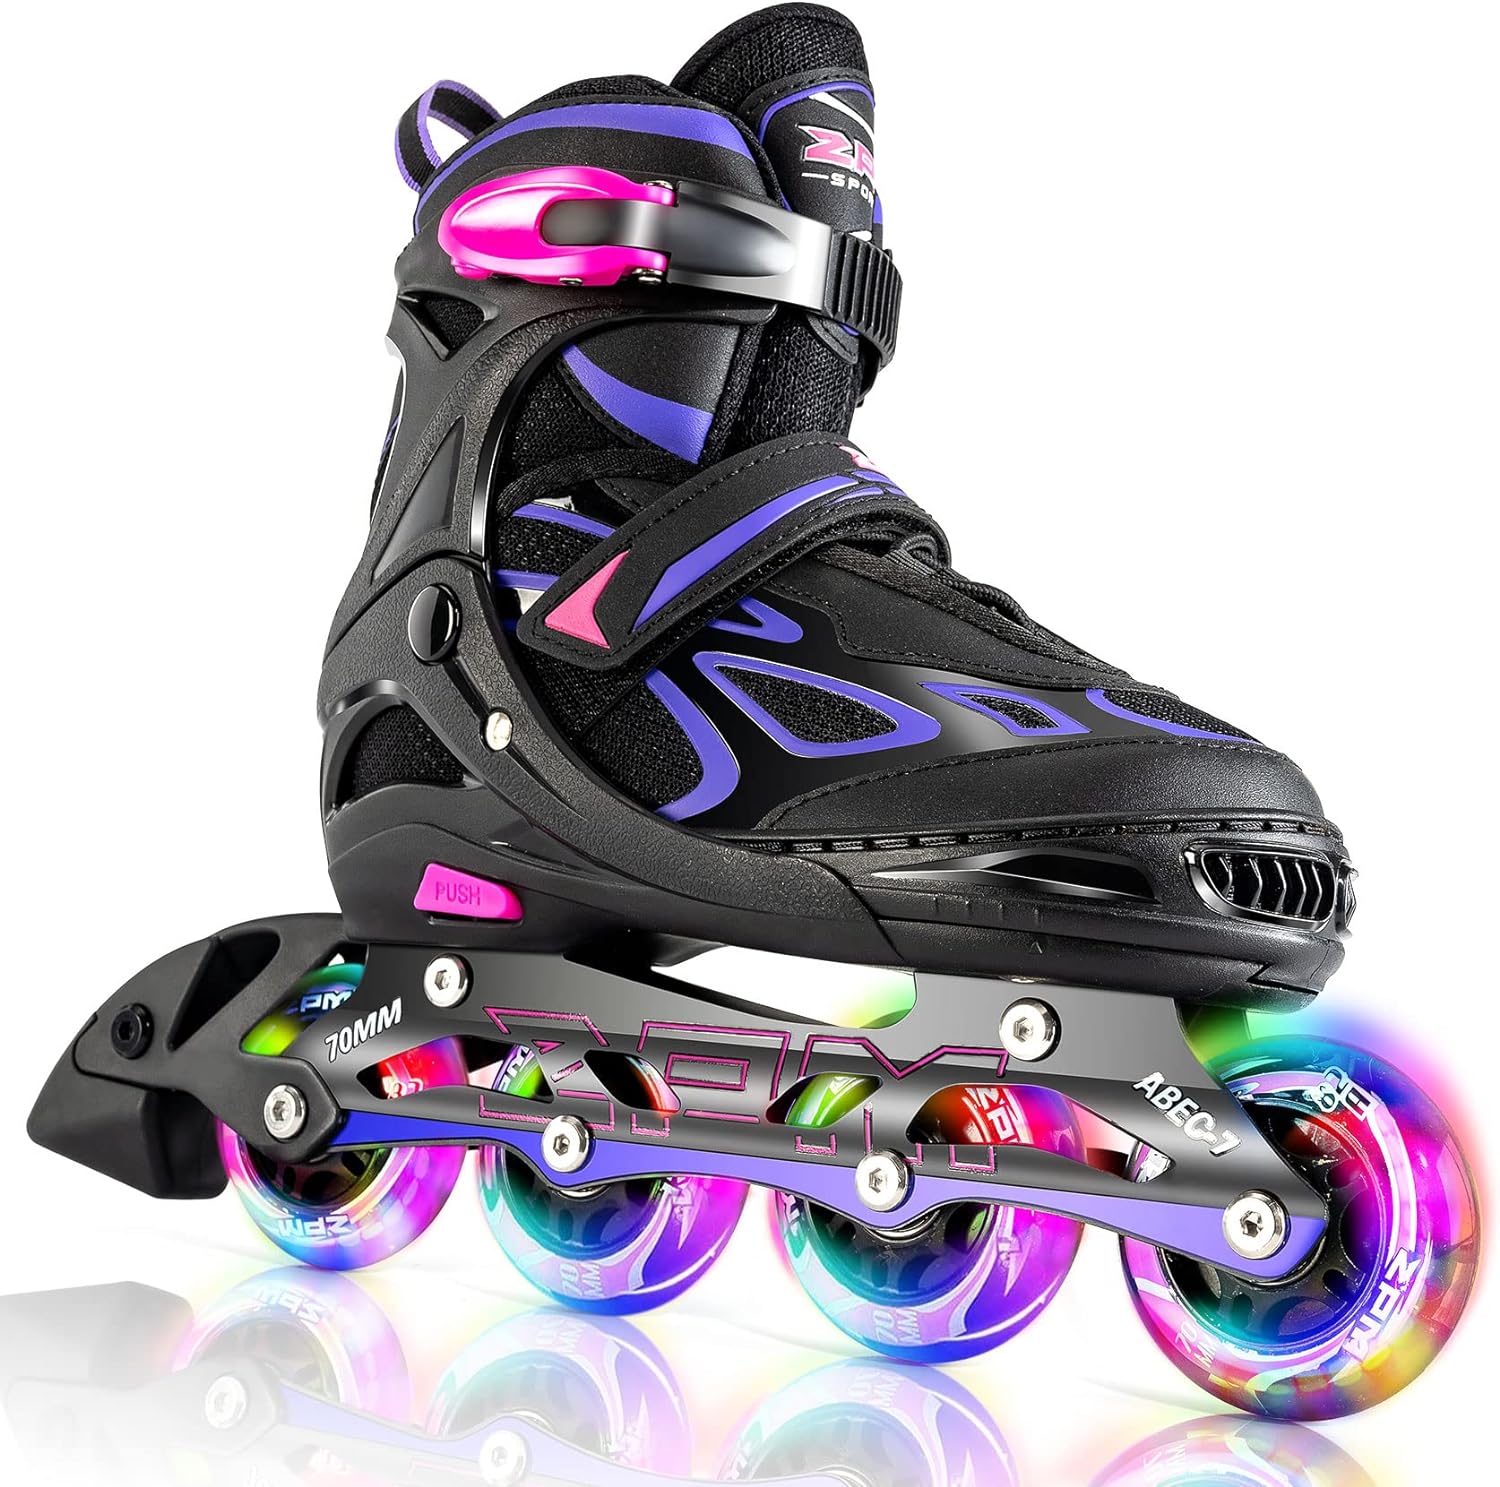 2PM SPORTS Vinal Girls Adjustable Flashing Inline Skates, All Wheels Light Up, Fun Illuminating Skates for Kids and Men